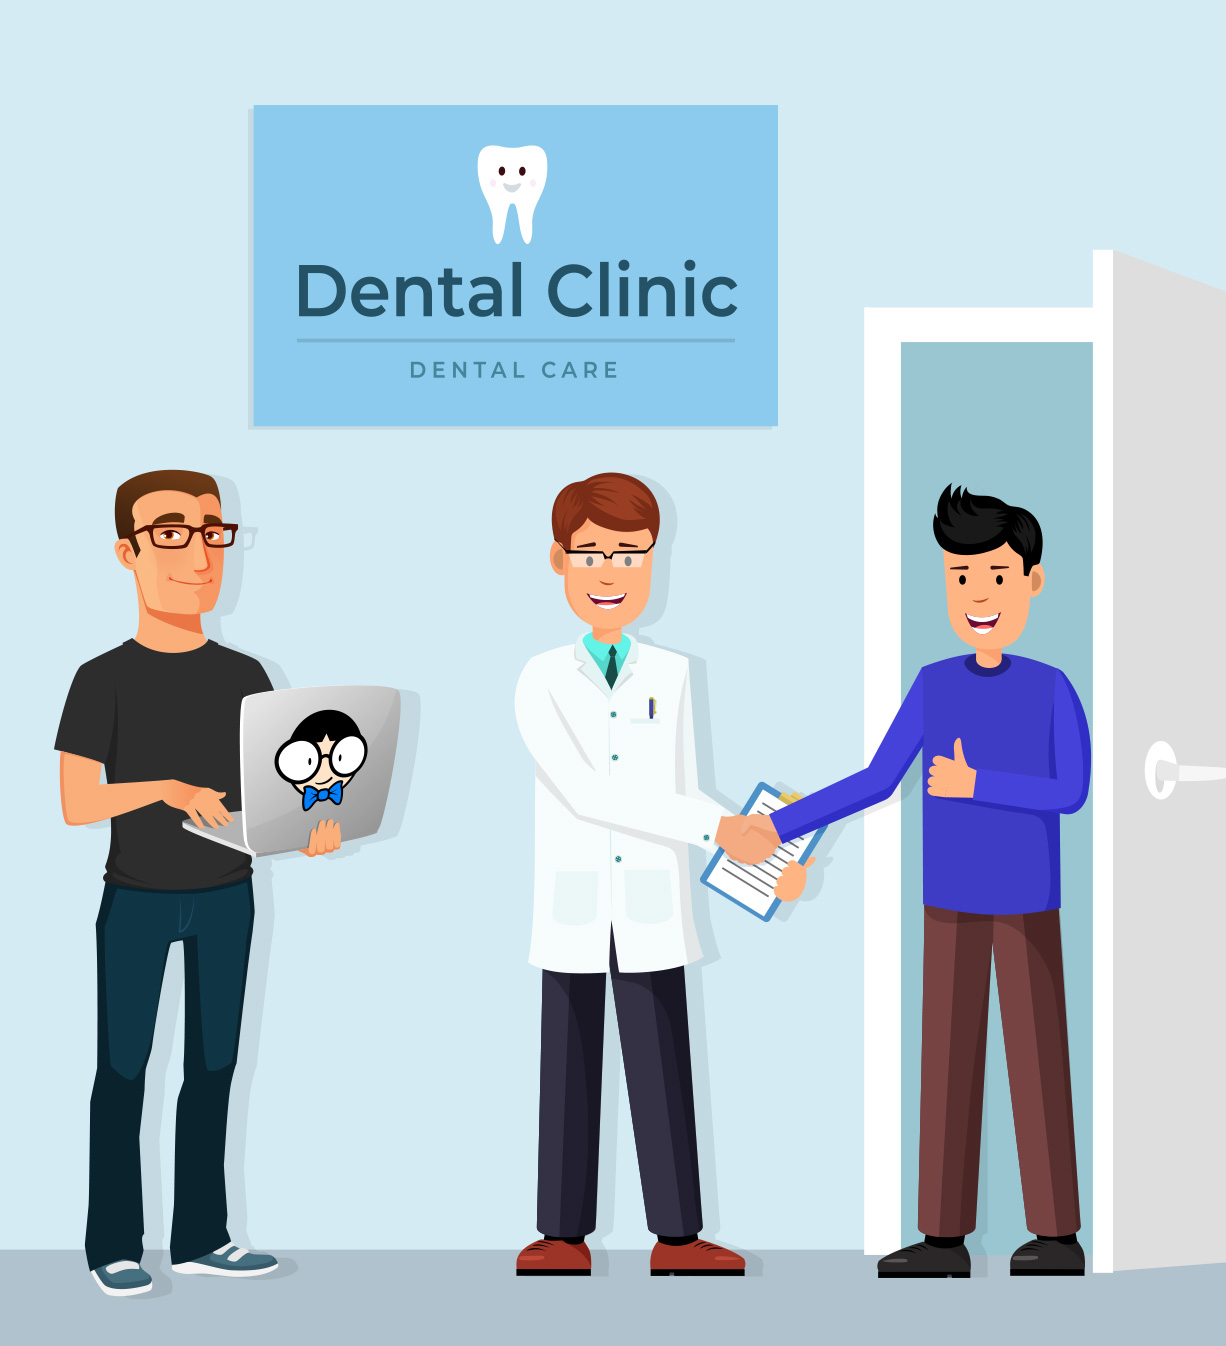 Dentist and Nerds marketing partnership